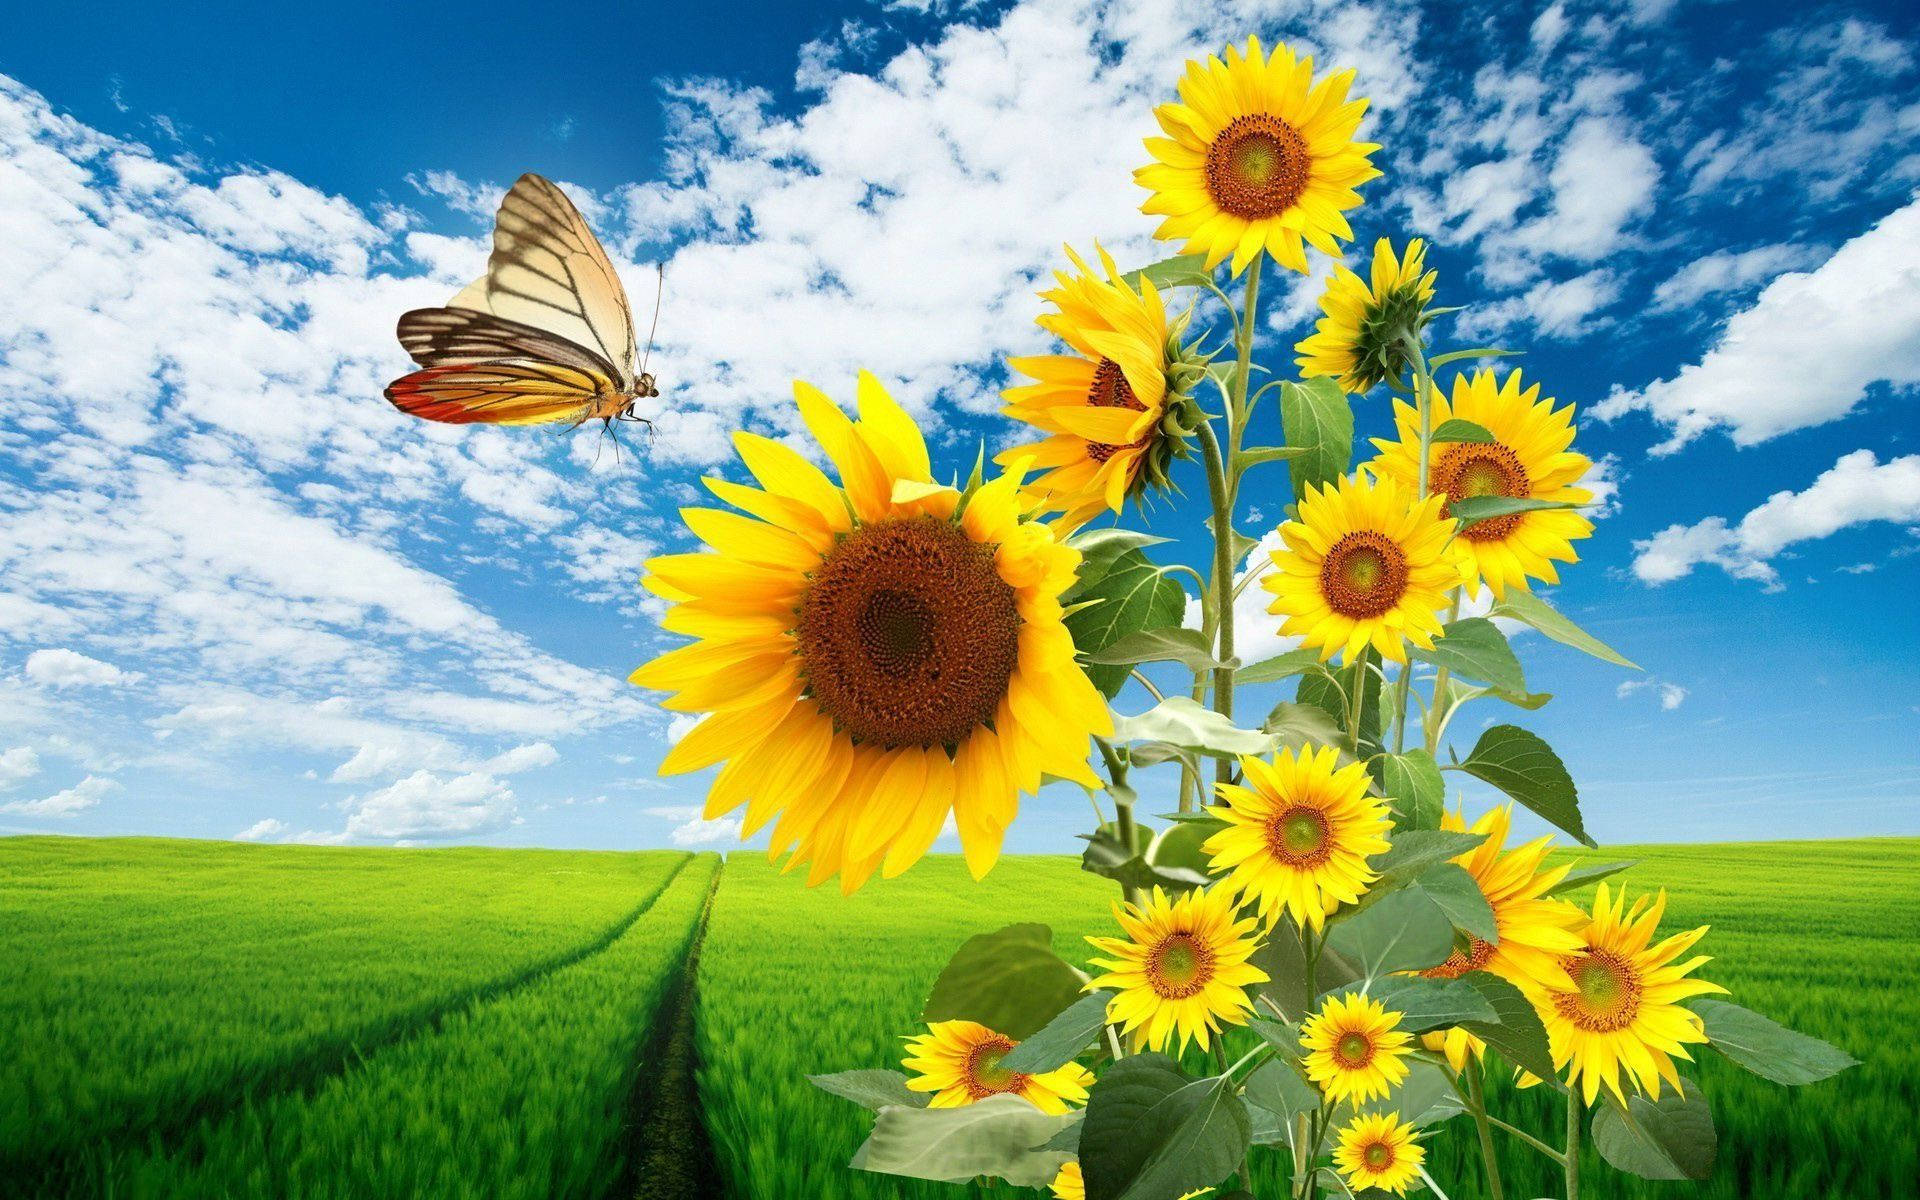 Free Sunflower Field Wallpaper Downloads, [100+] Sunflower Field Wallpapers  for FREE 